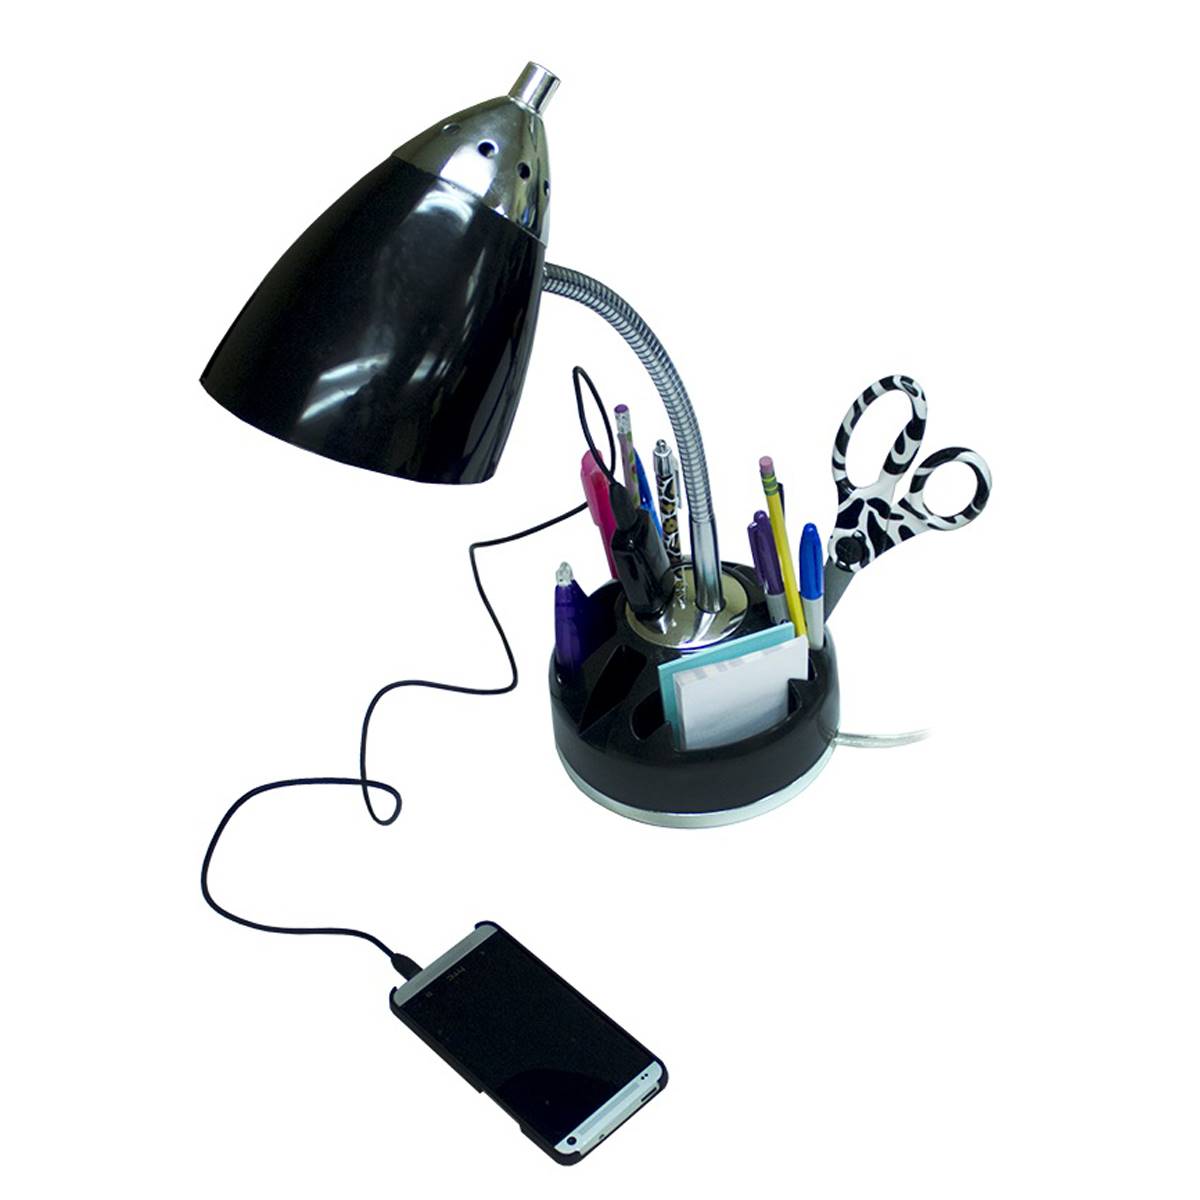 LimeLights Flossy Lazy Susan Charging Outlet Organizer Desk Lamp